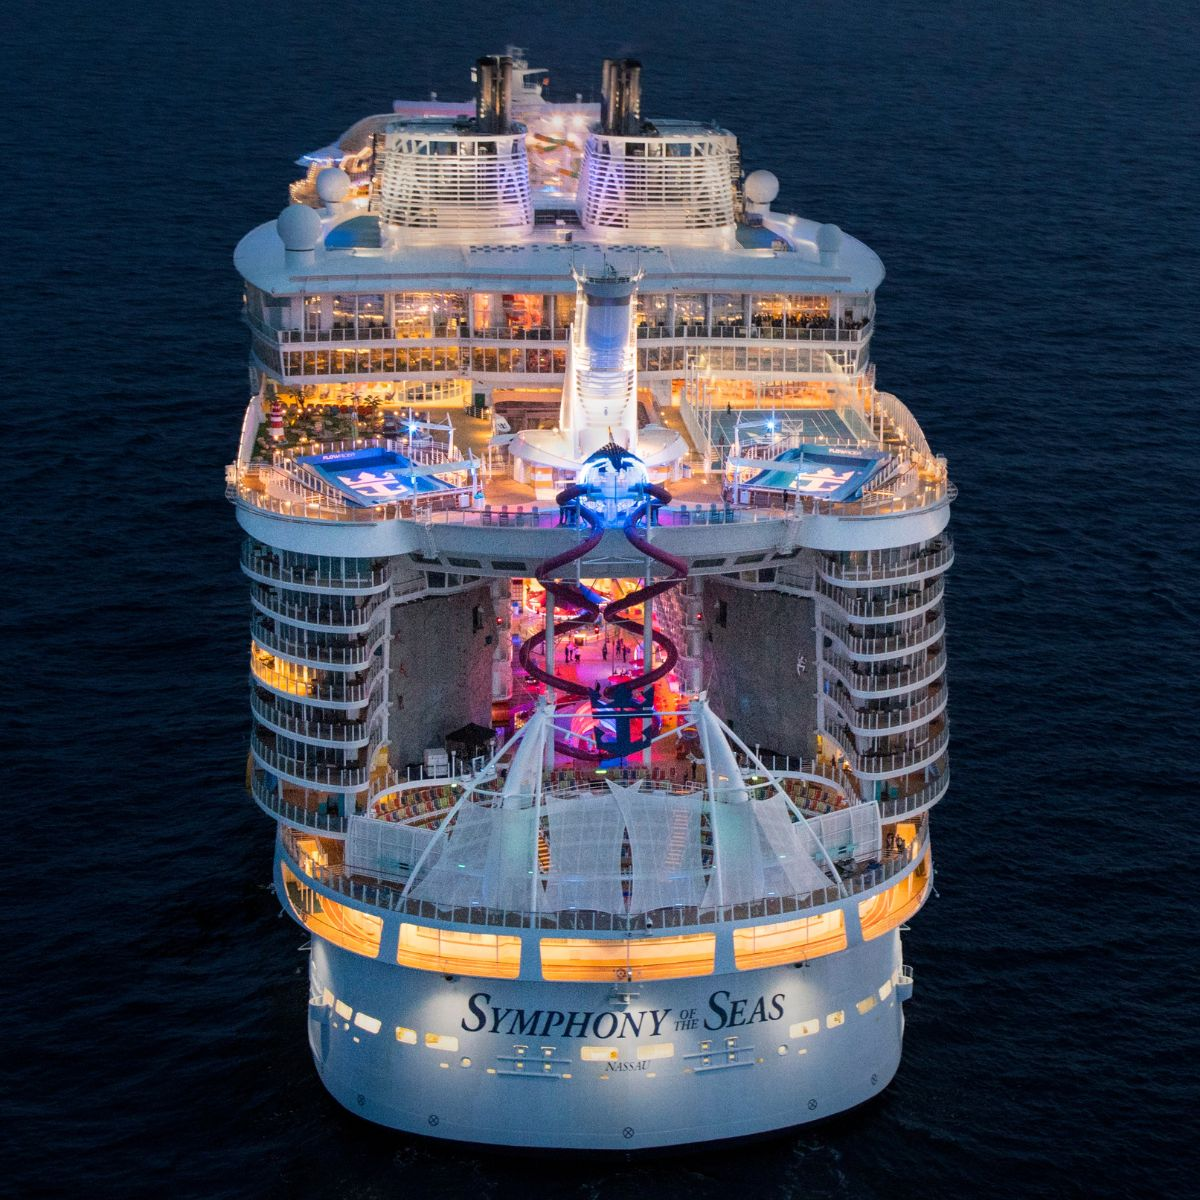 Royal Caribbean Cruise Ships: Symphony of the Seas